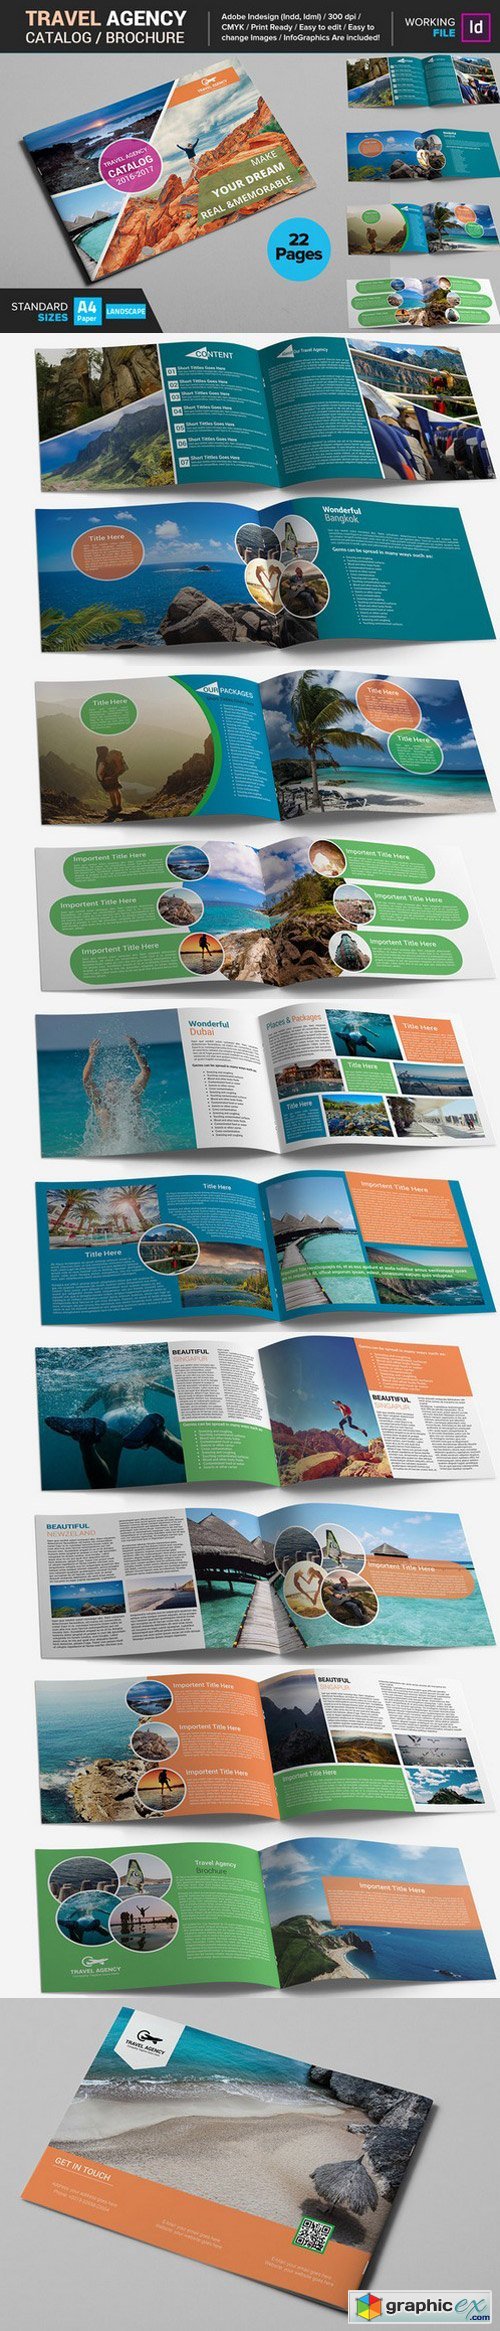 Travel Agency Catalog / Brochure